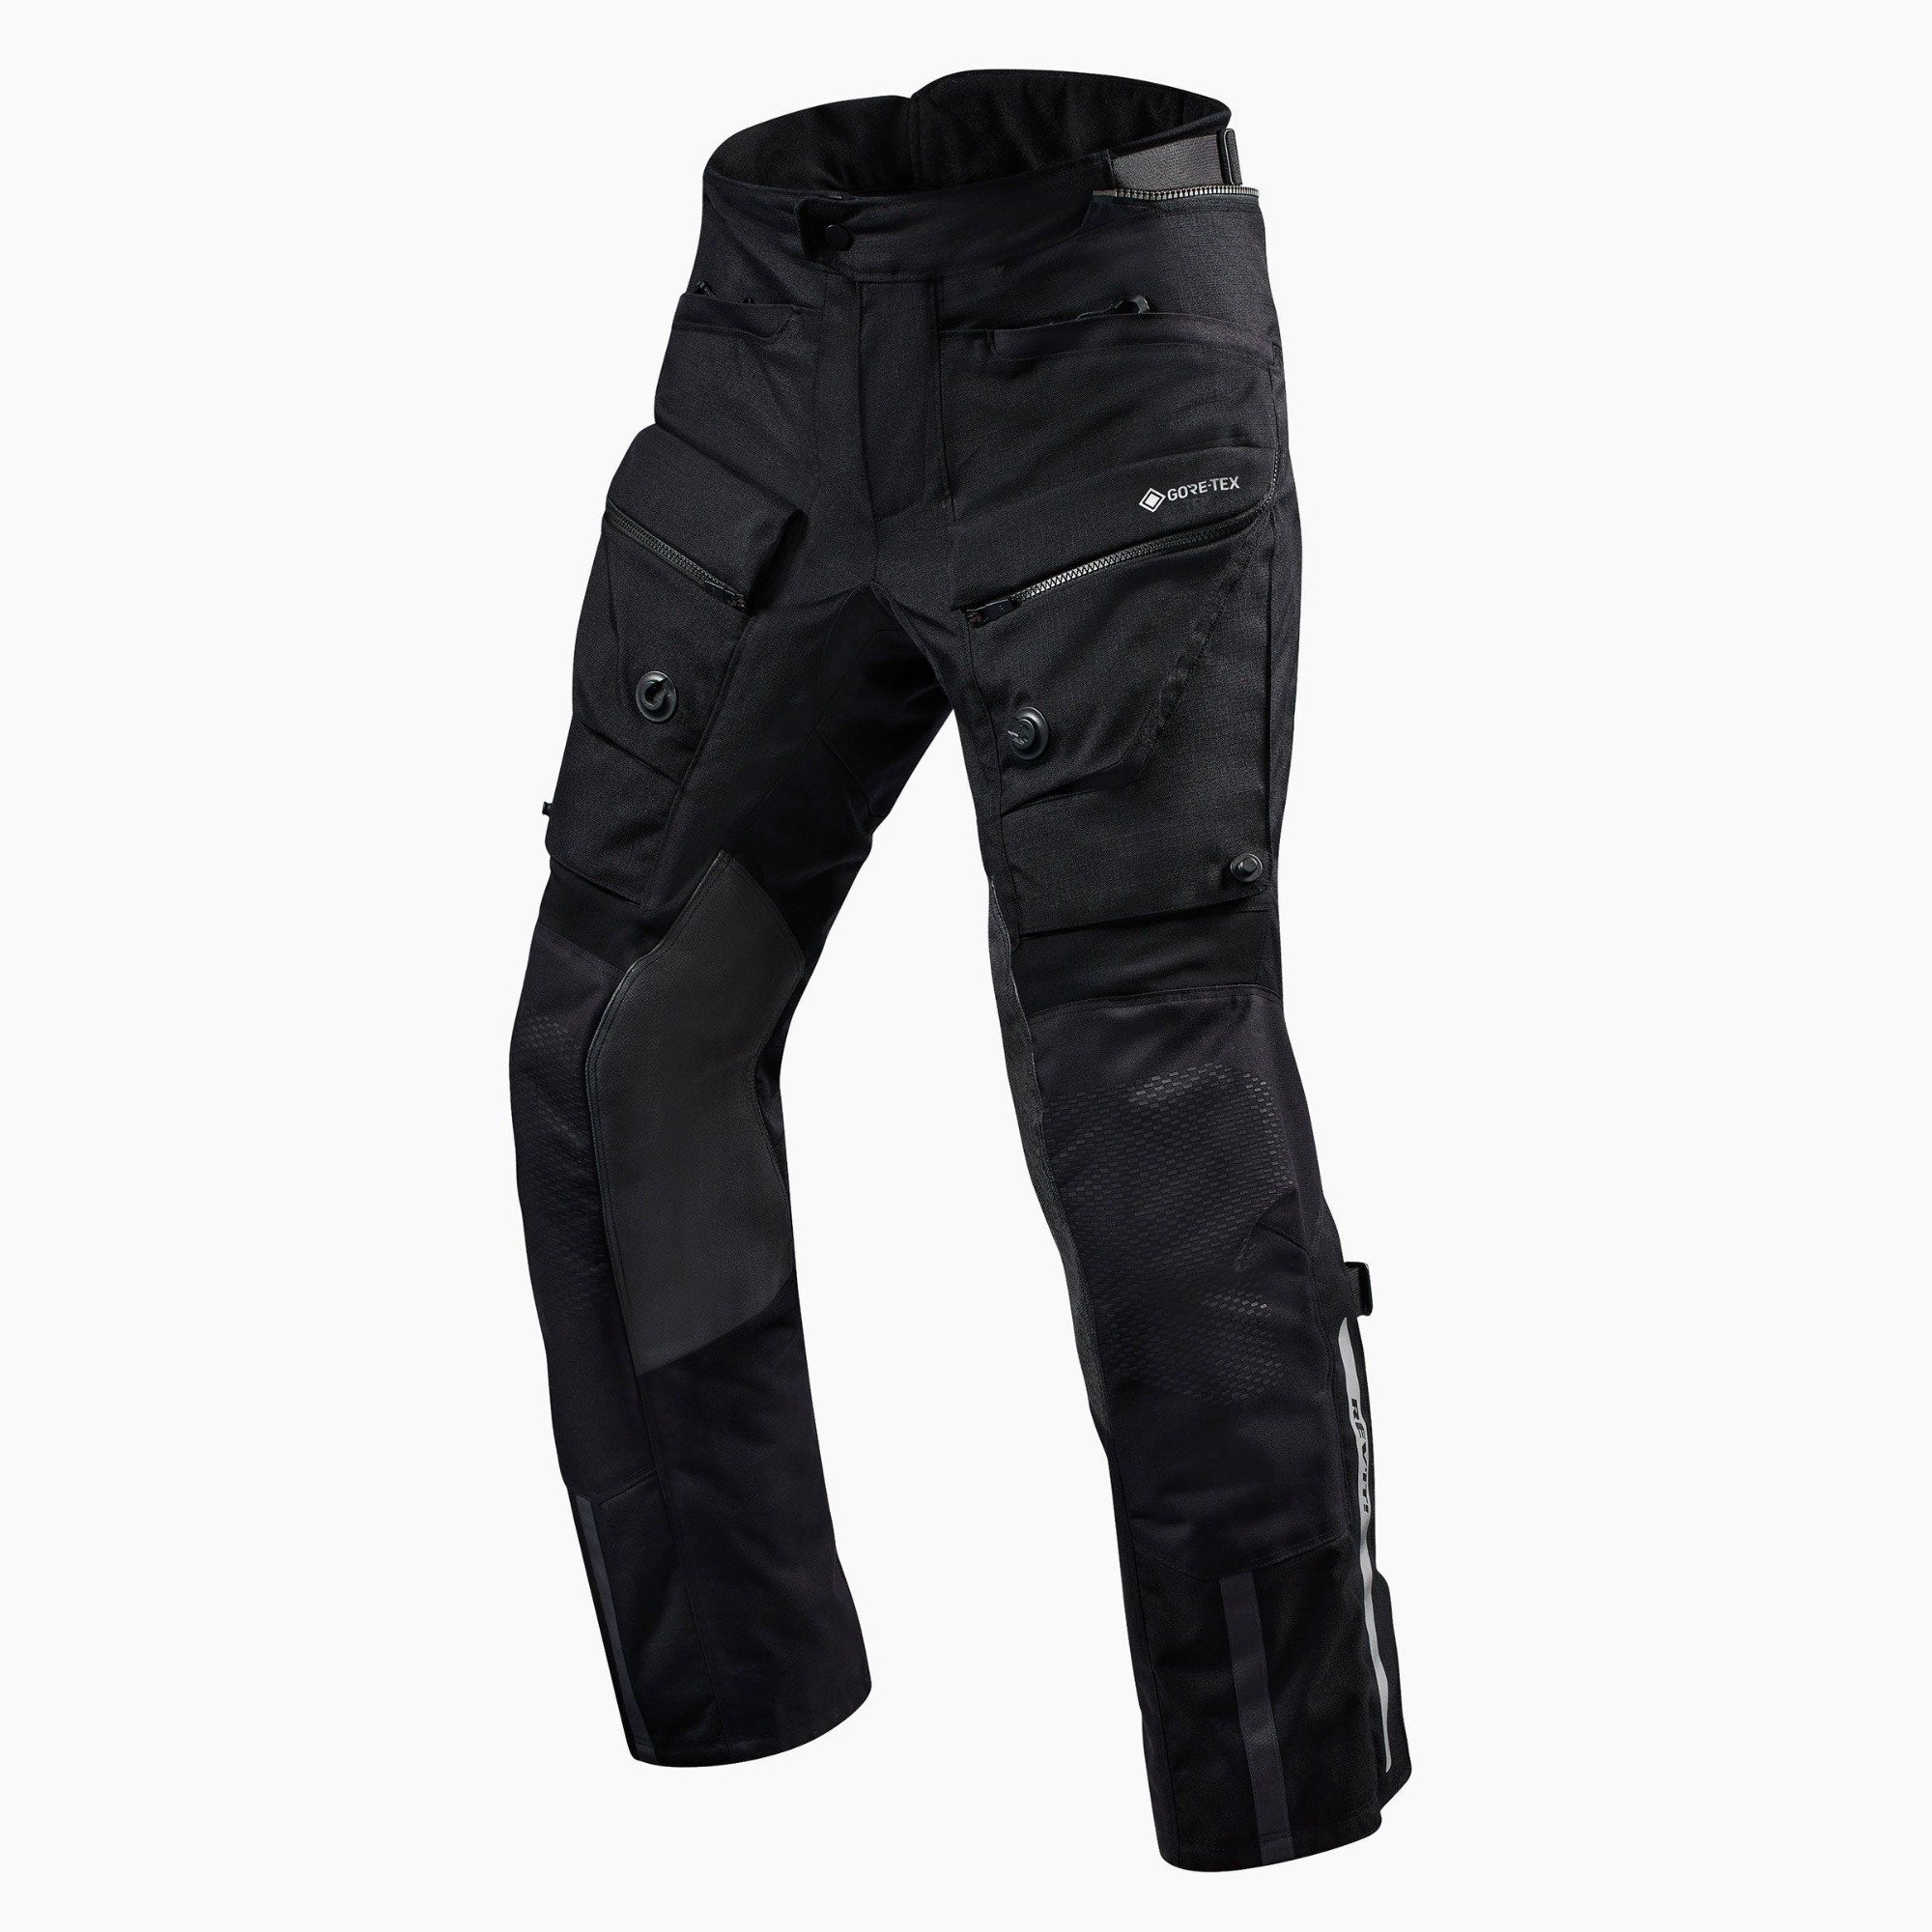 Image of REV'IT! Trousers Defender 3 GTX Black Short Motorcycle Pants Size 2XL EN